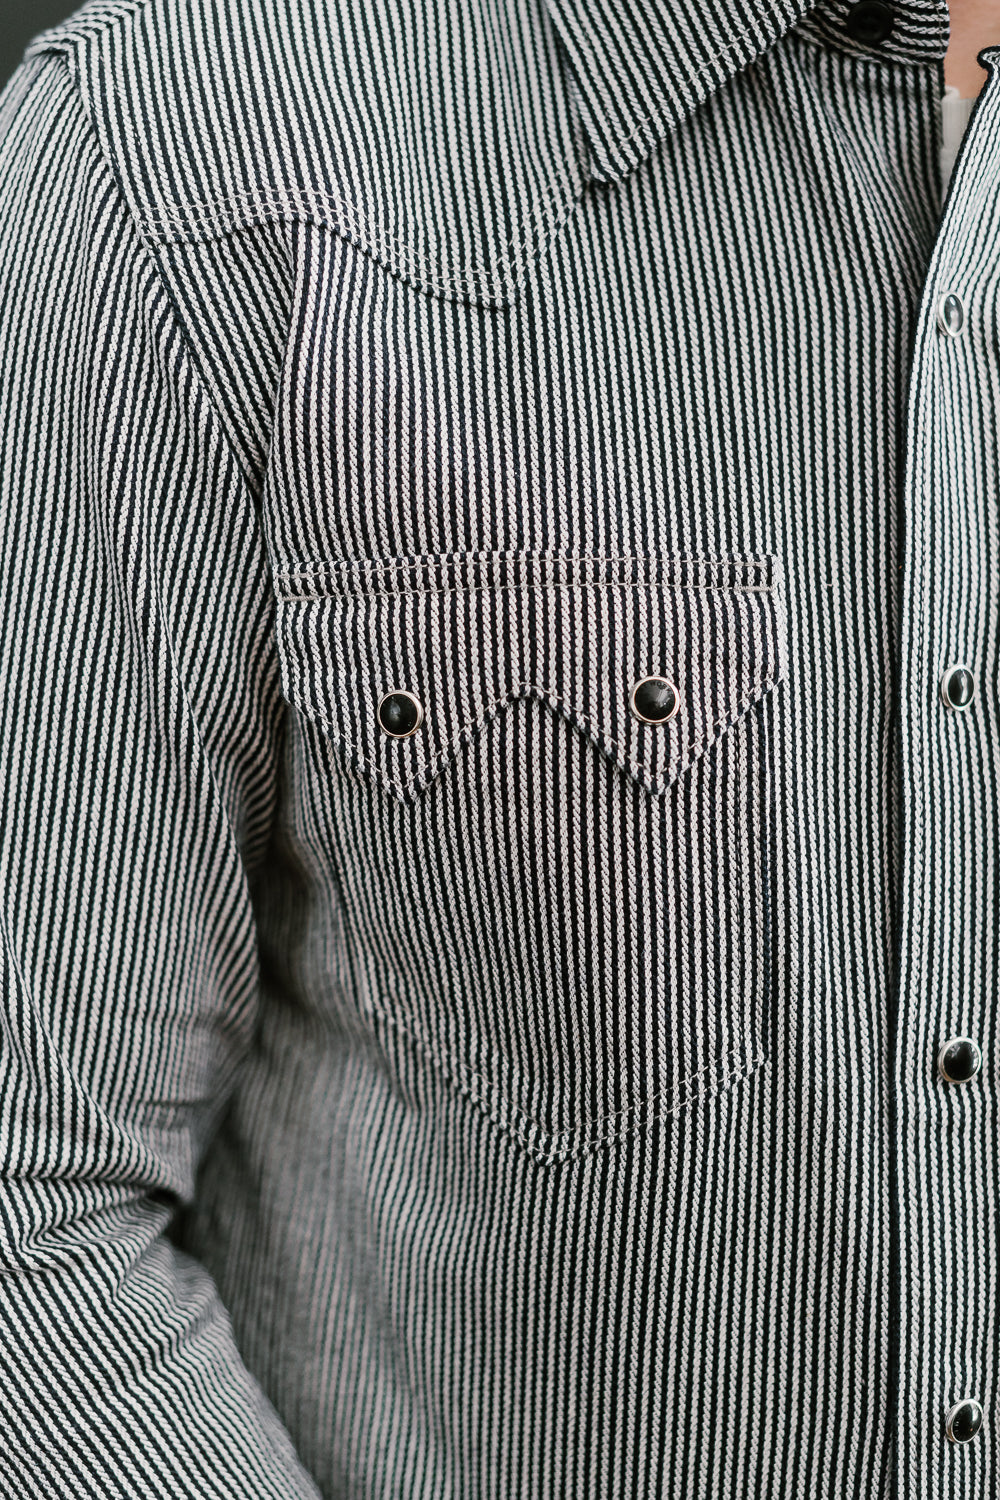 IHSH-365-IND - 8oz Herringbone Hickory Stripe Sawtooth Western Shirt - Indigo